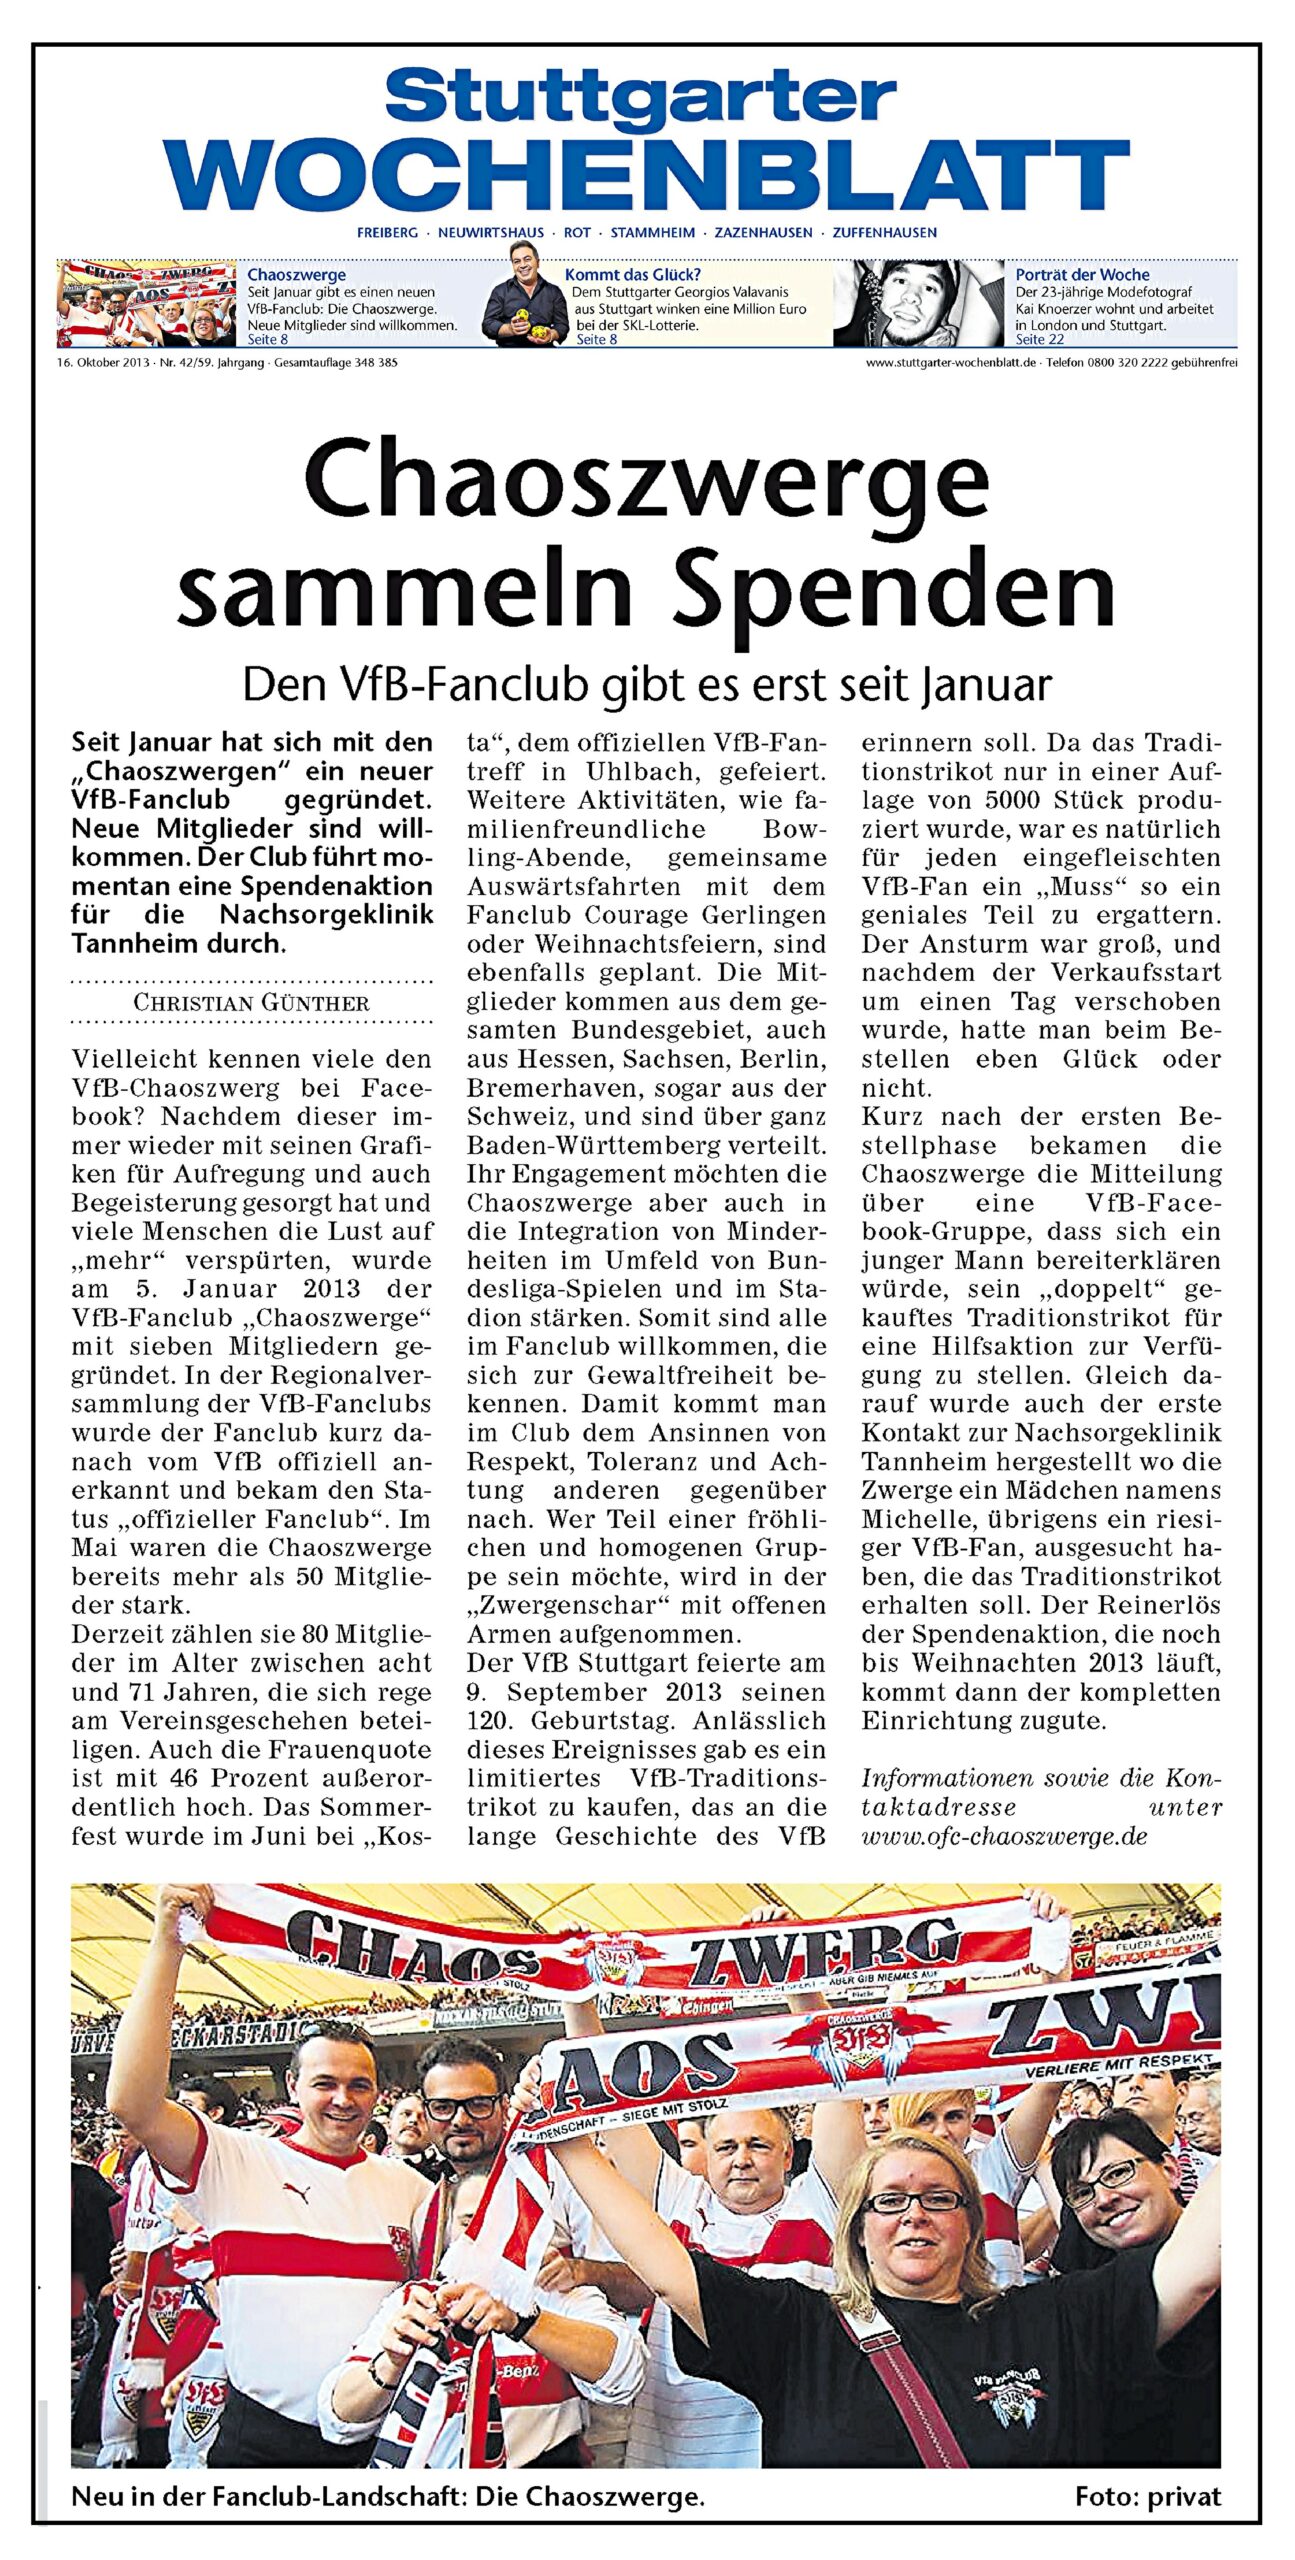 Wochenblatt_16.10.2013_(06.1)